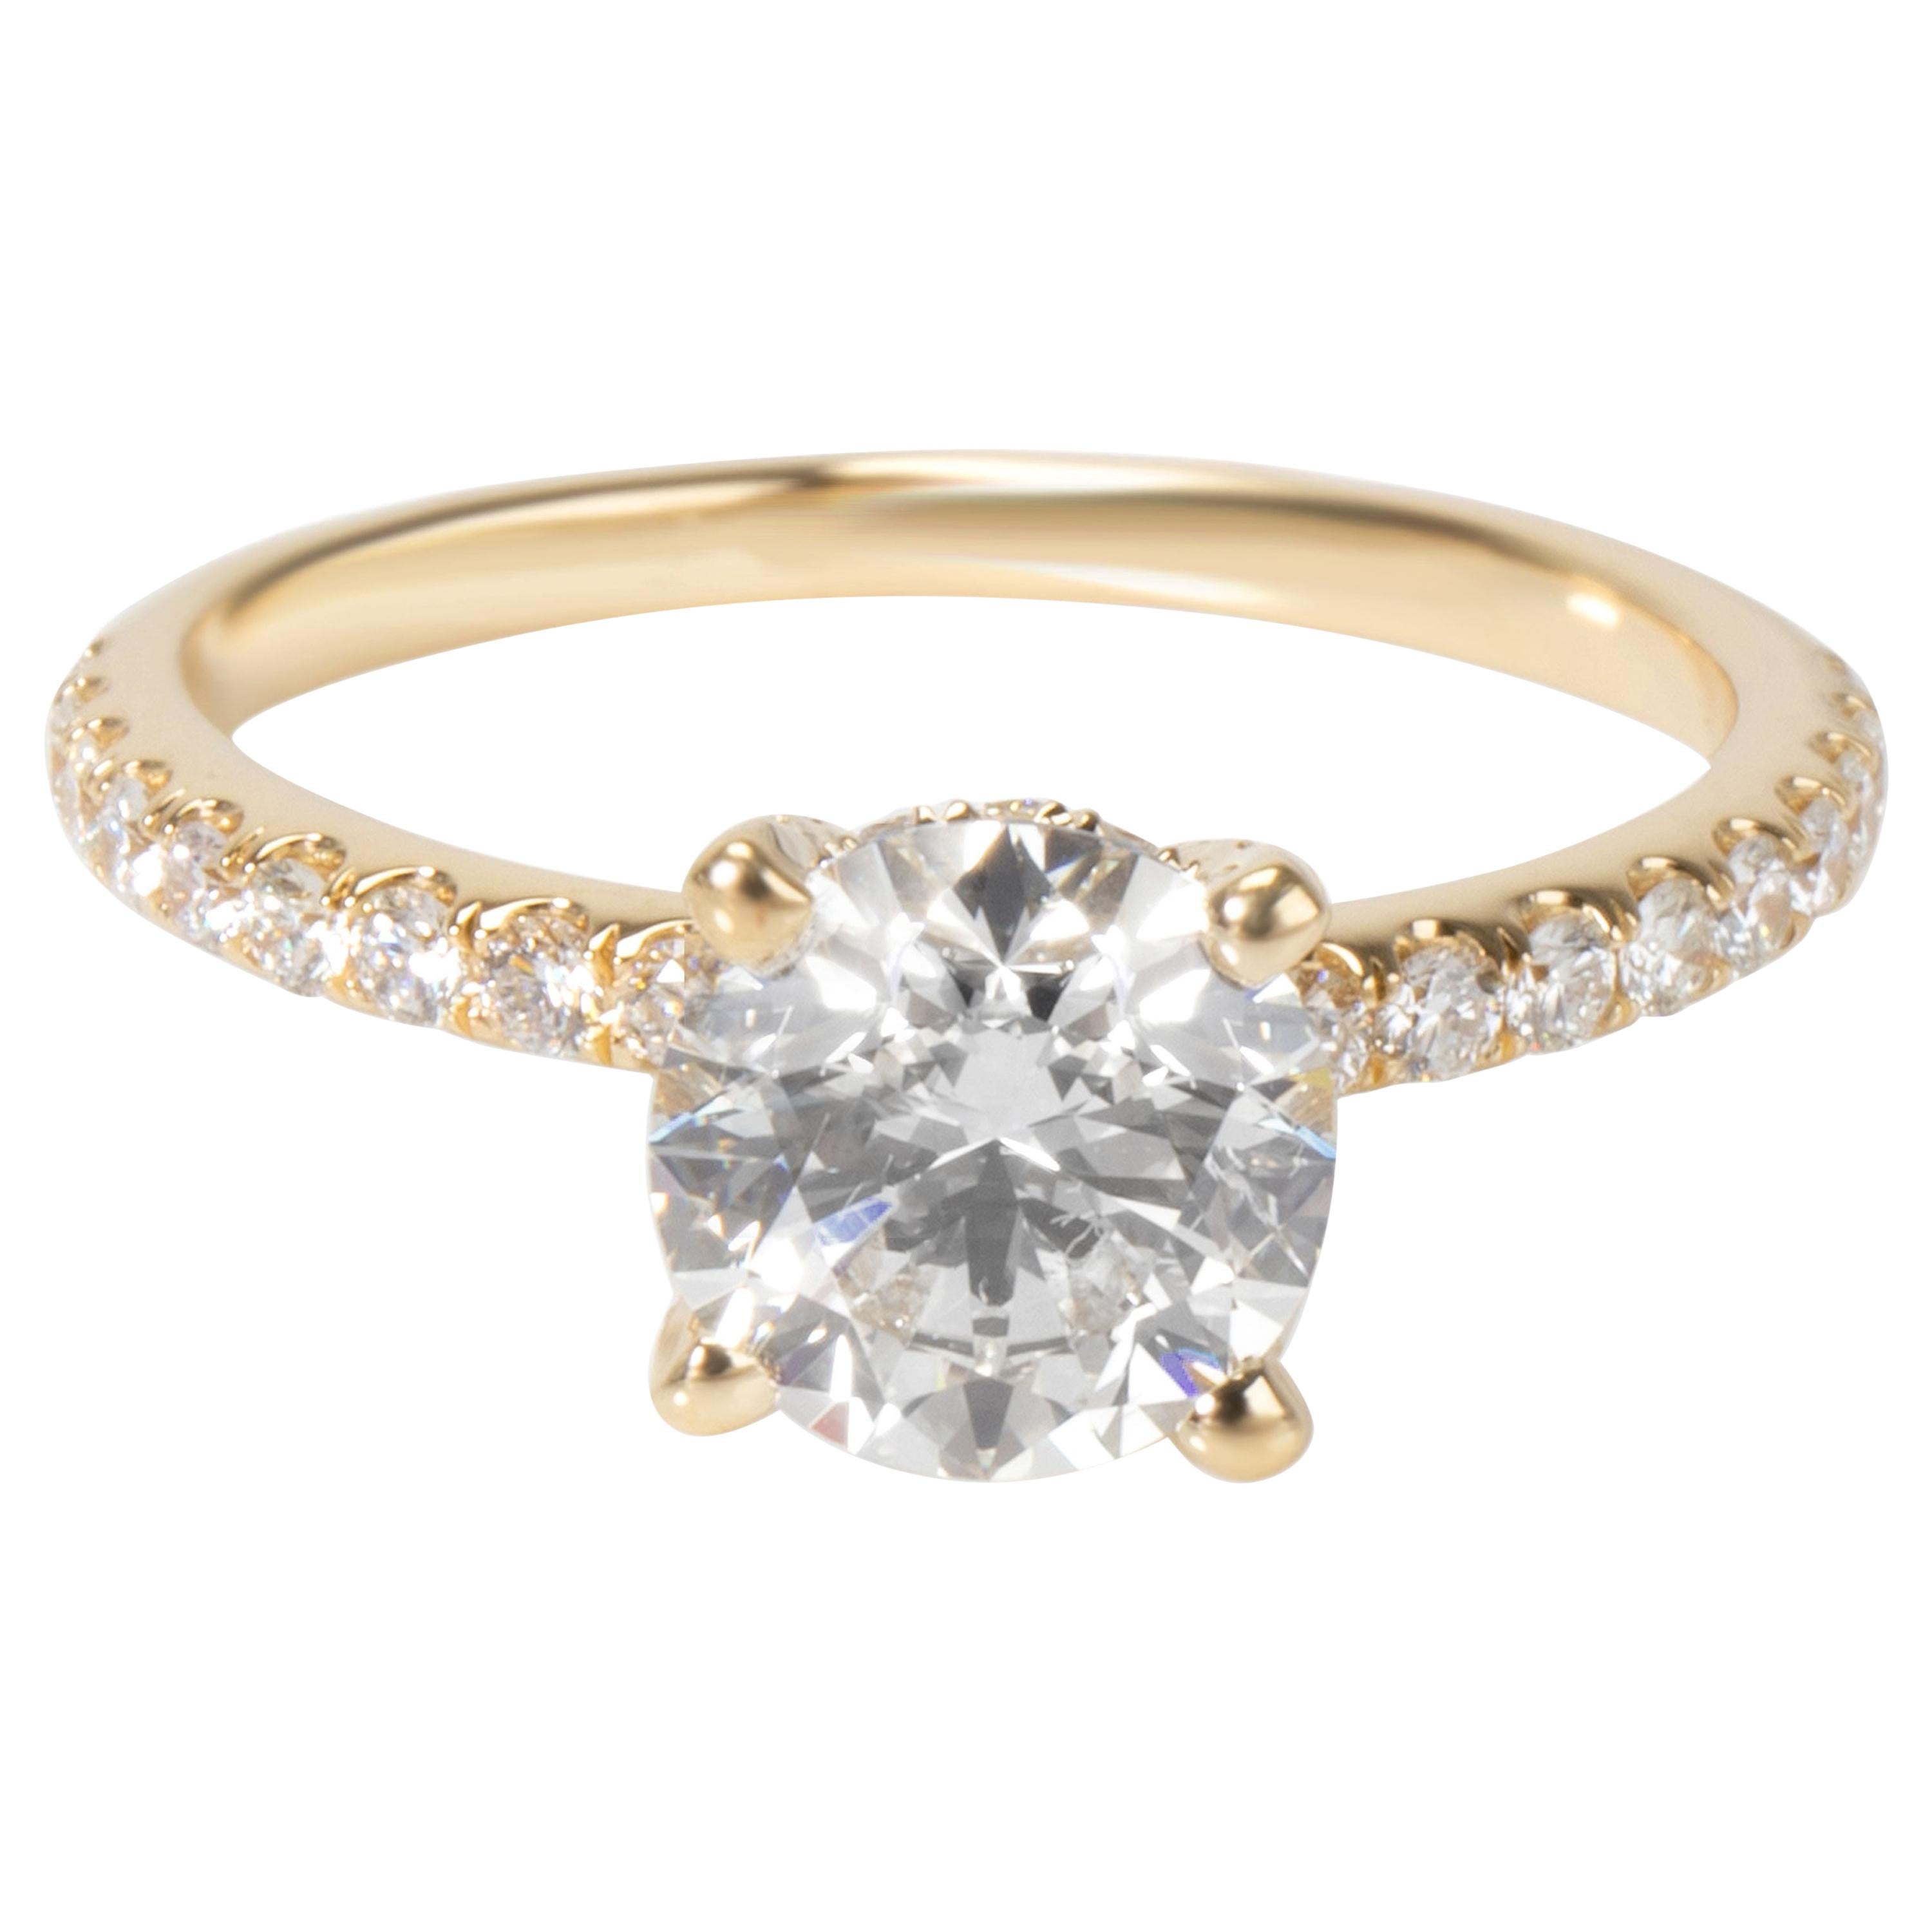 James Allen Diamond Engagement Ring in 14 Karat Yellow Gold GIA G VS1 1.49 Carat